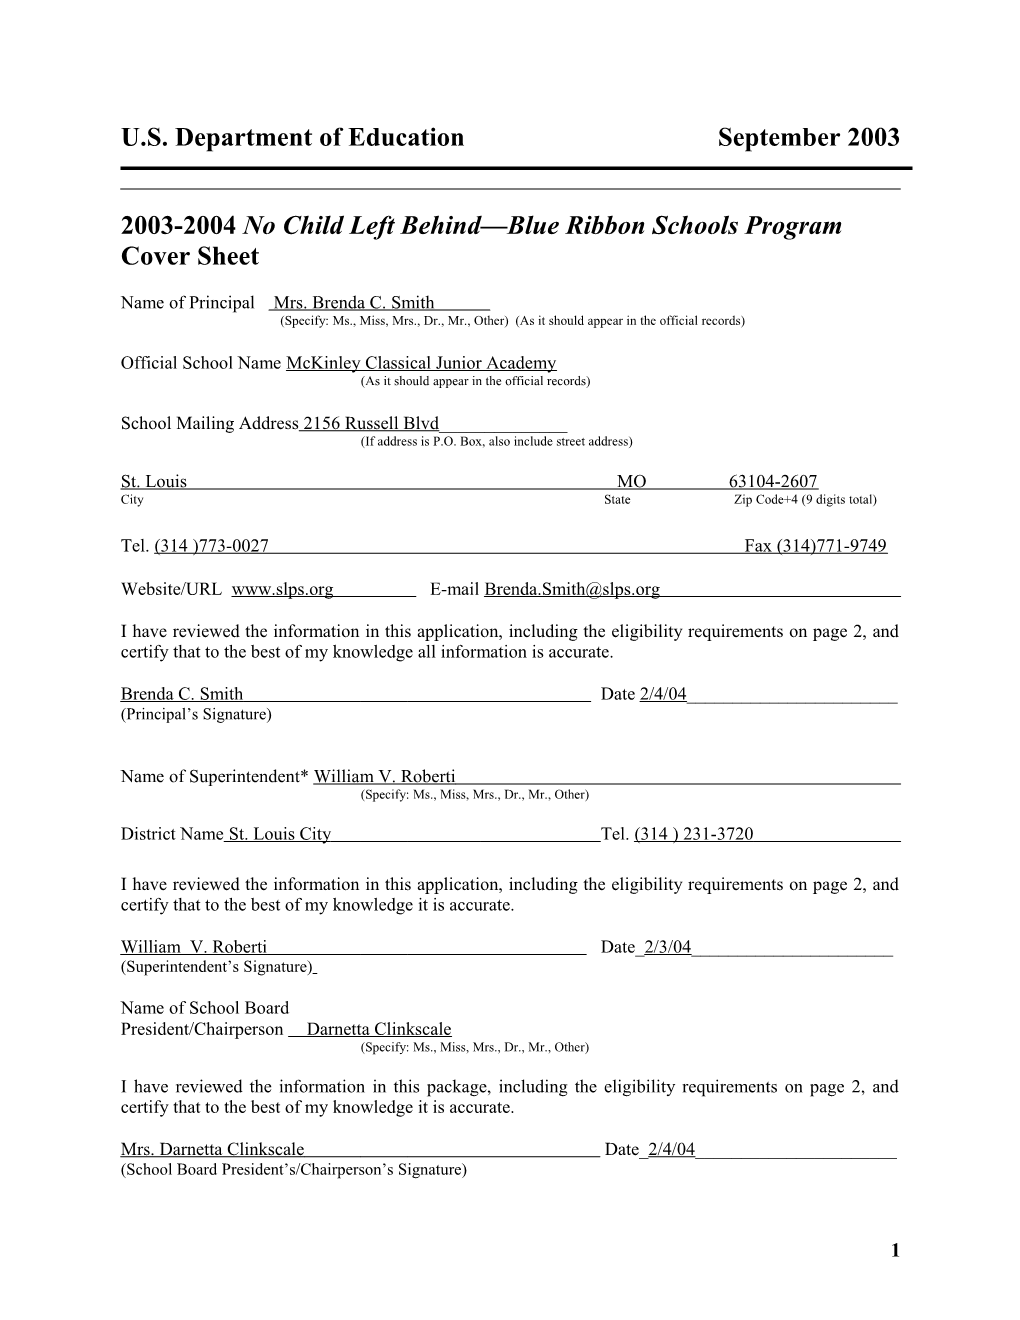 Mckinley Classical Junior Academy 2004 No Child Left Behind-Blue Ribbon School Application